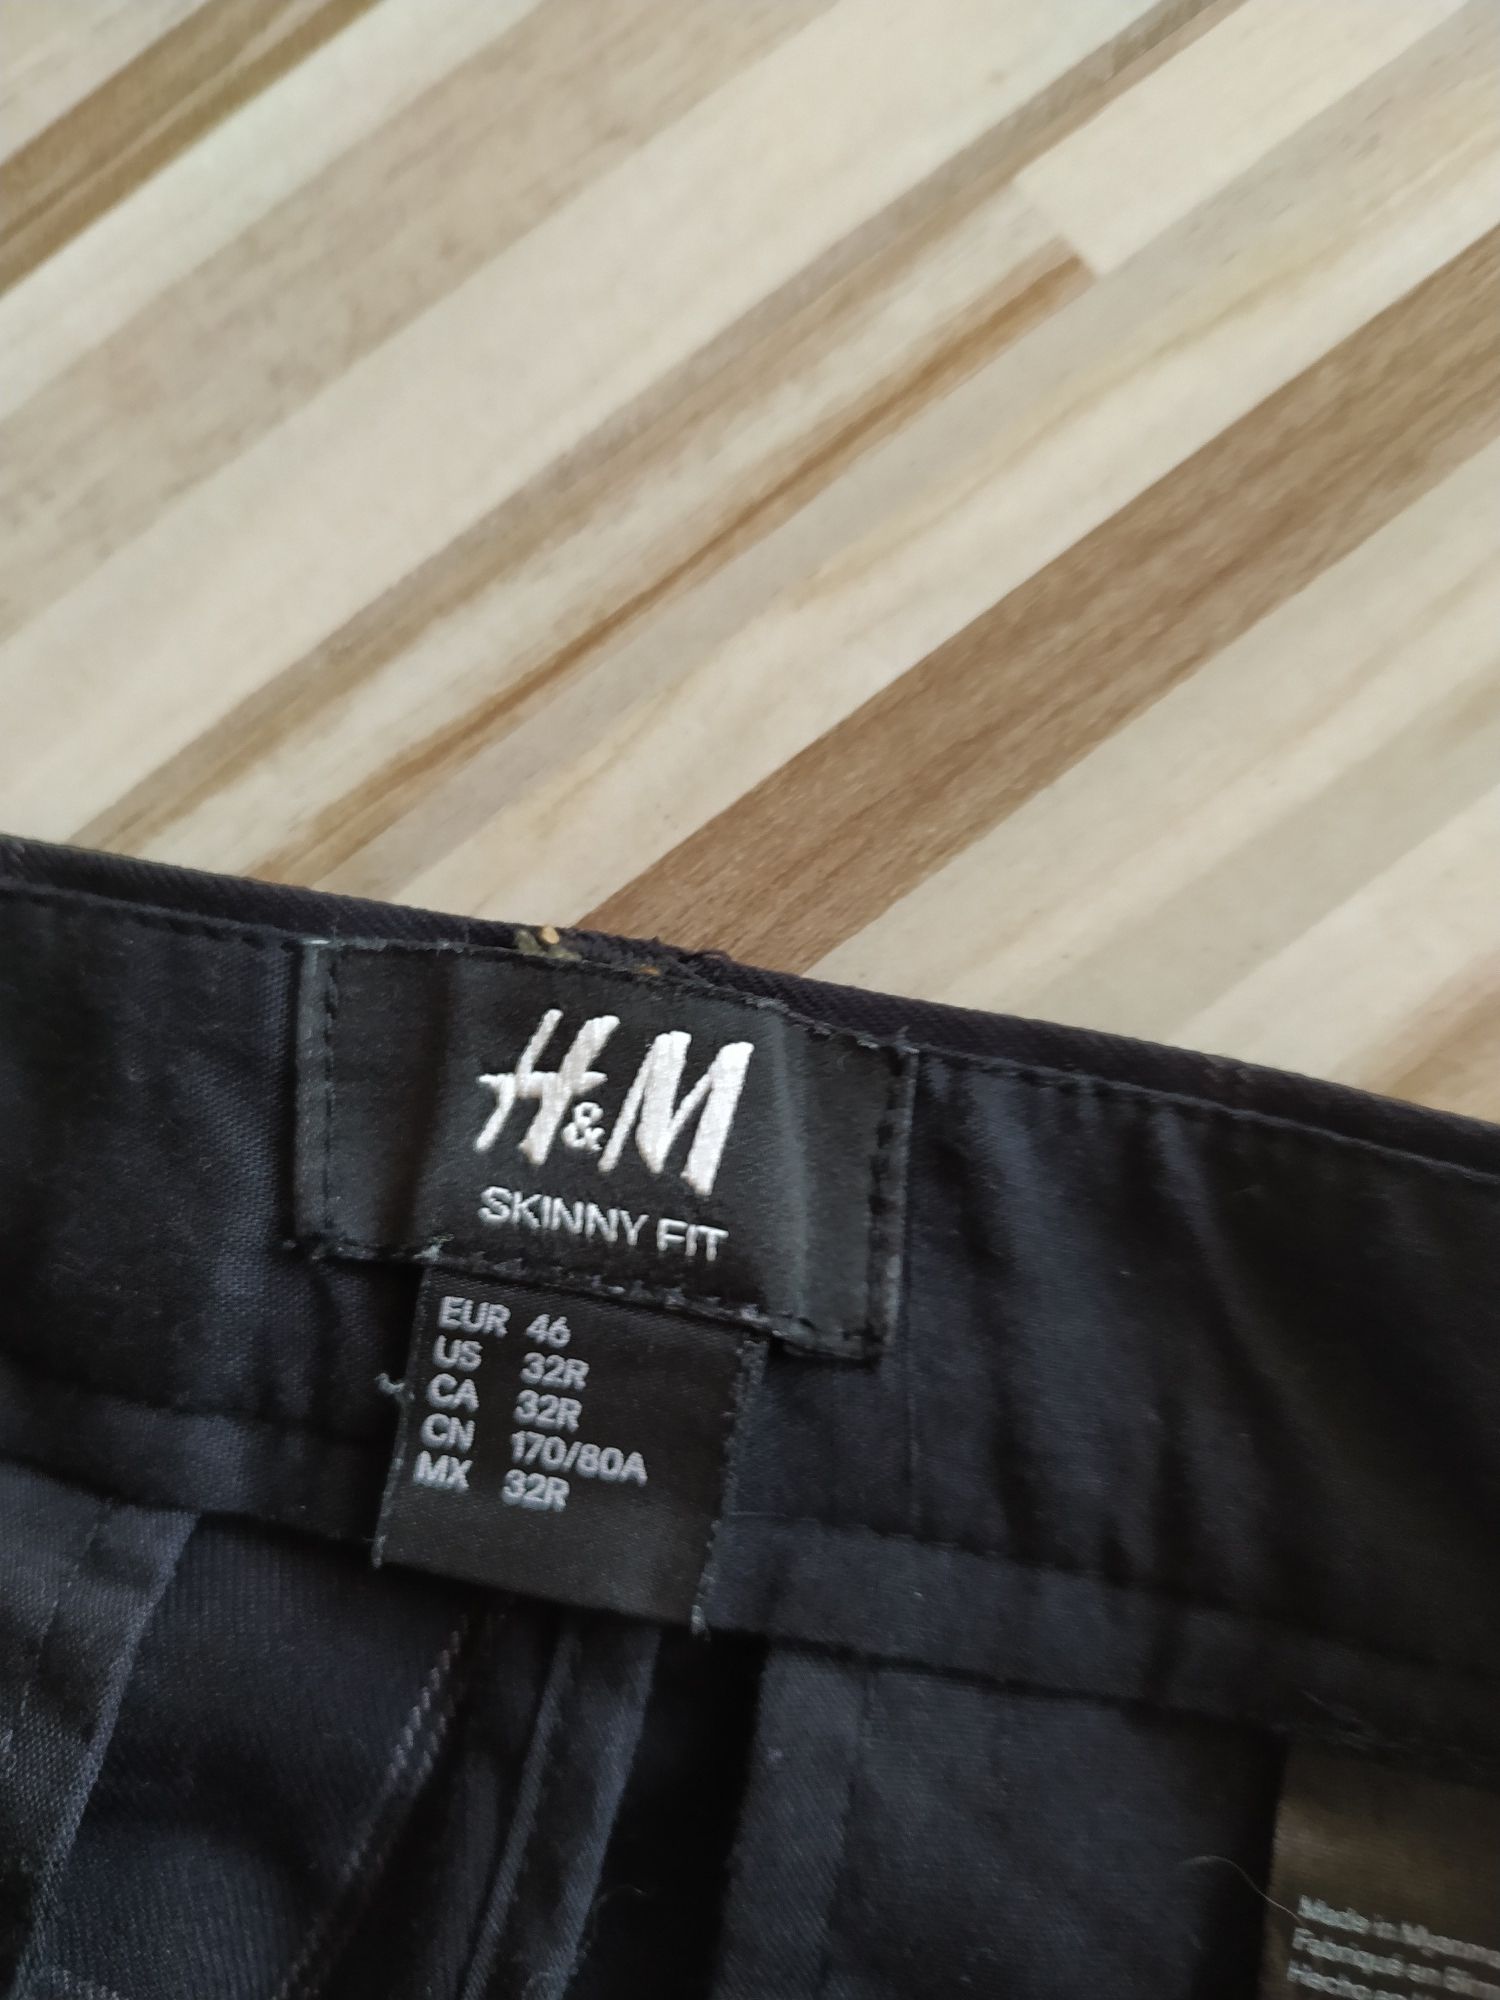 Spodnie H&M Skinnyfit 46 32R krata